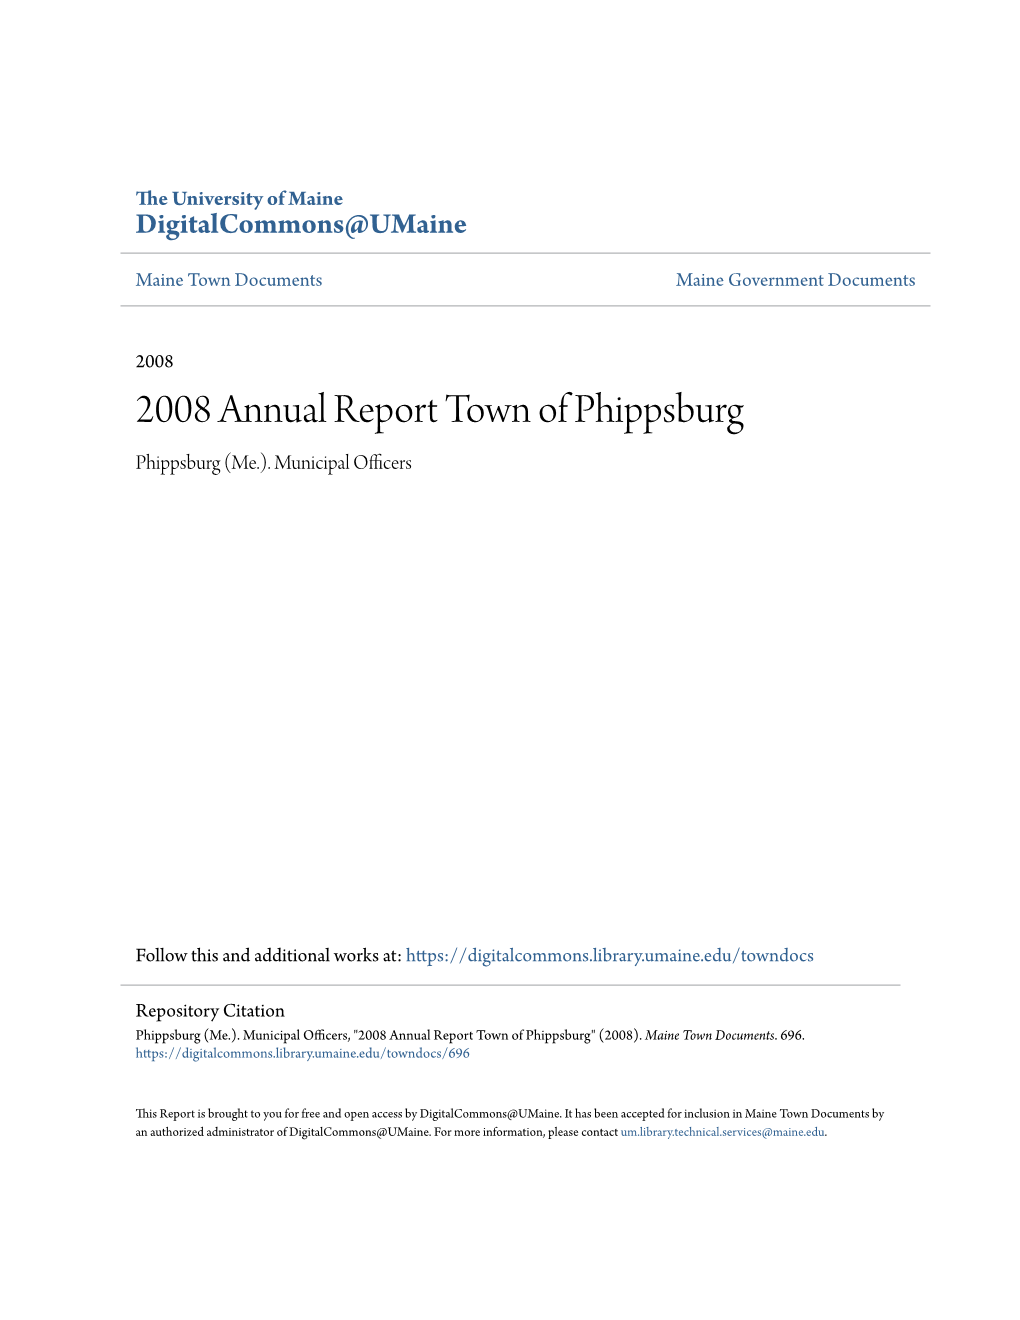 2008 Annual Report Town of Phippsburg Phippsburg (Me.)